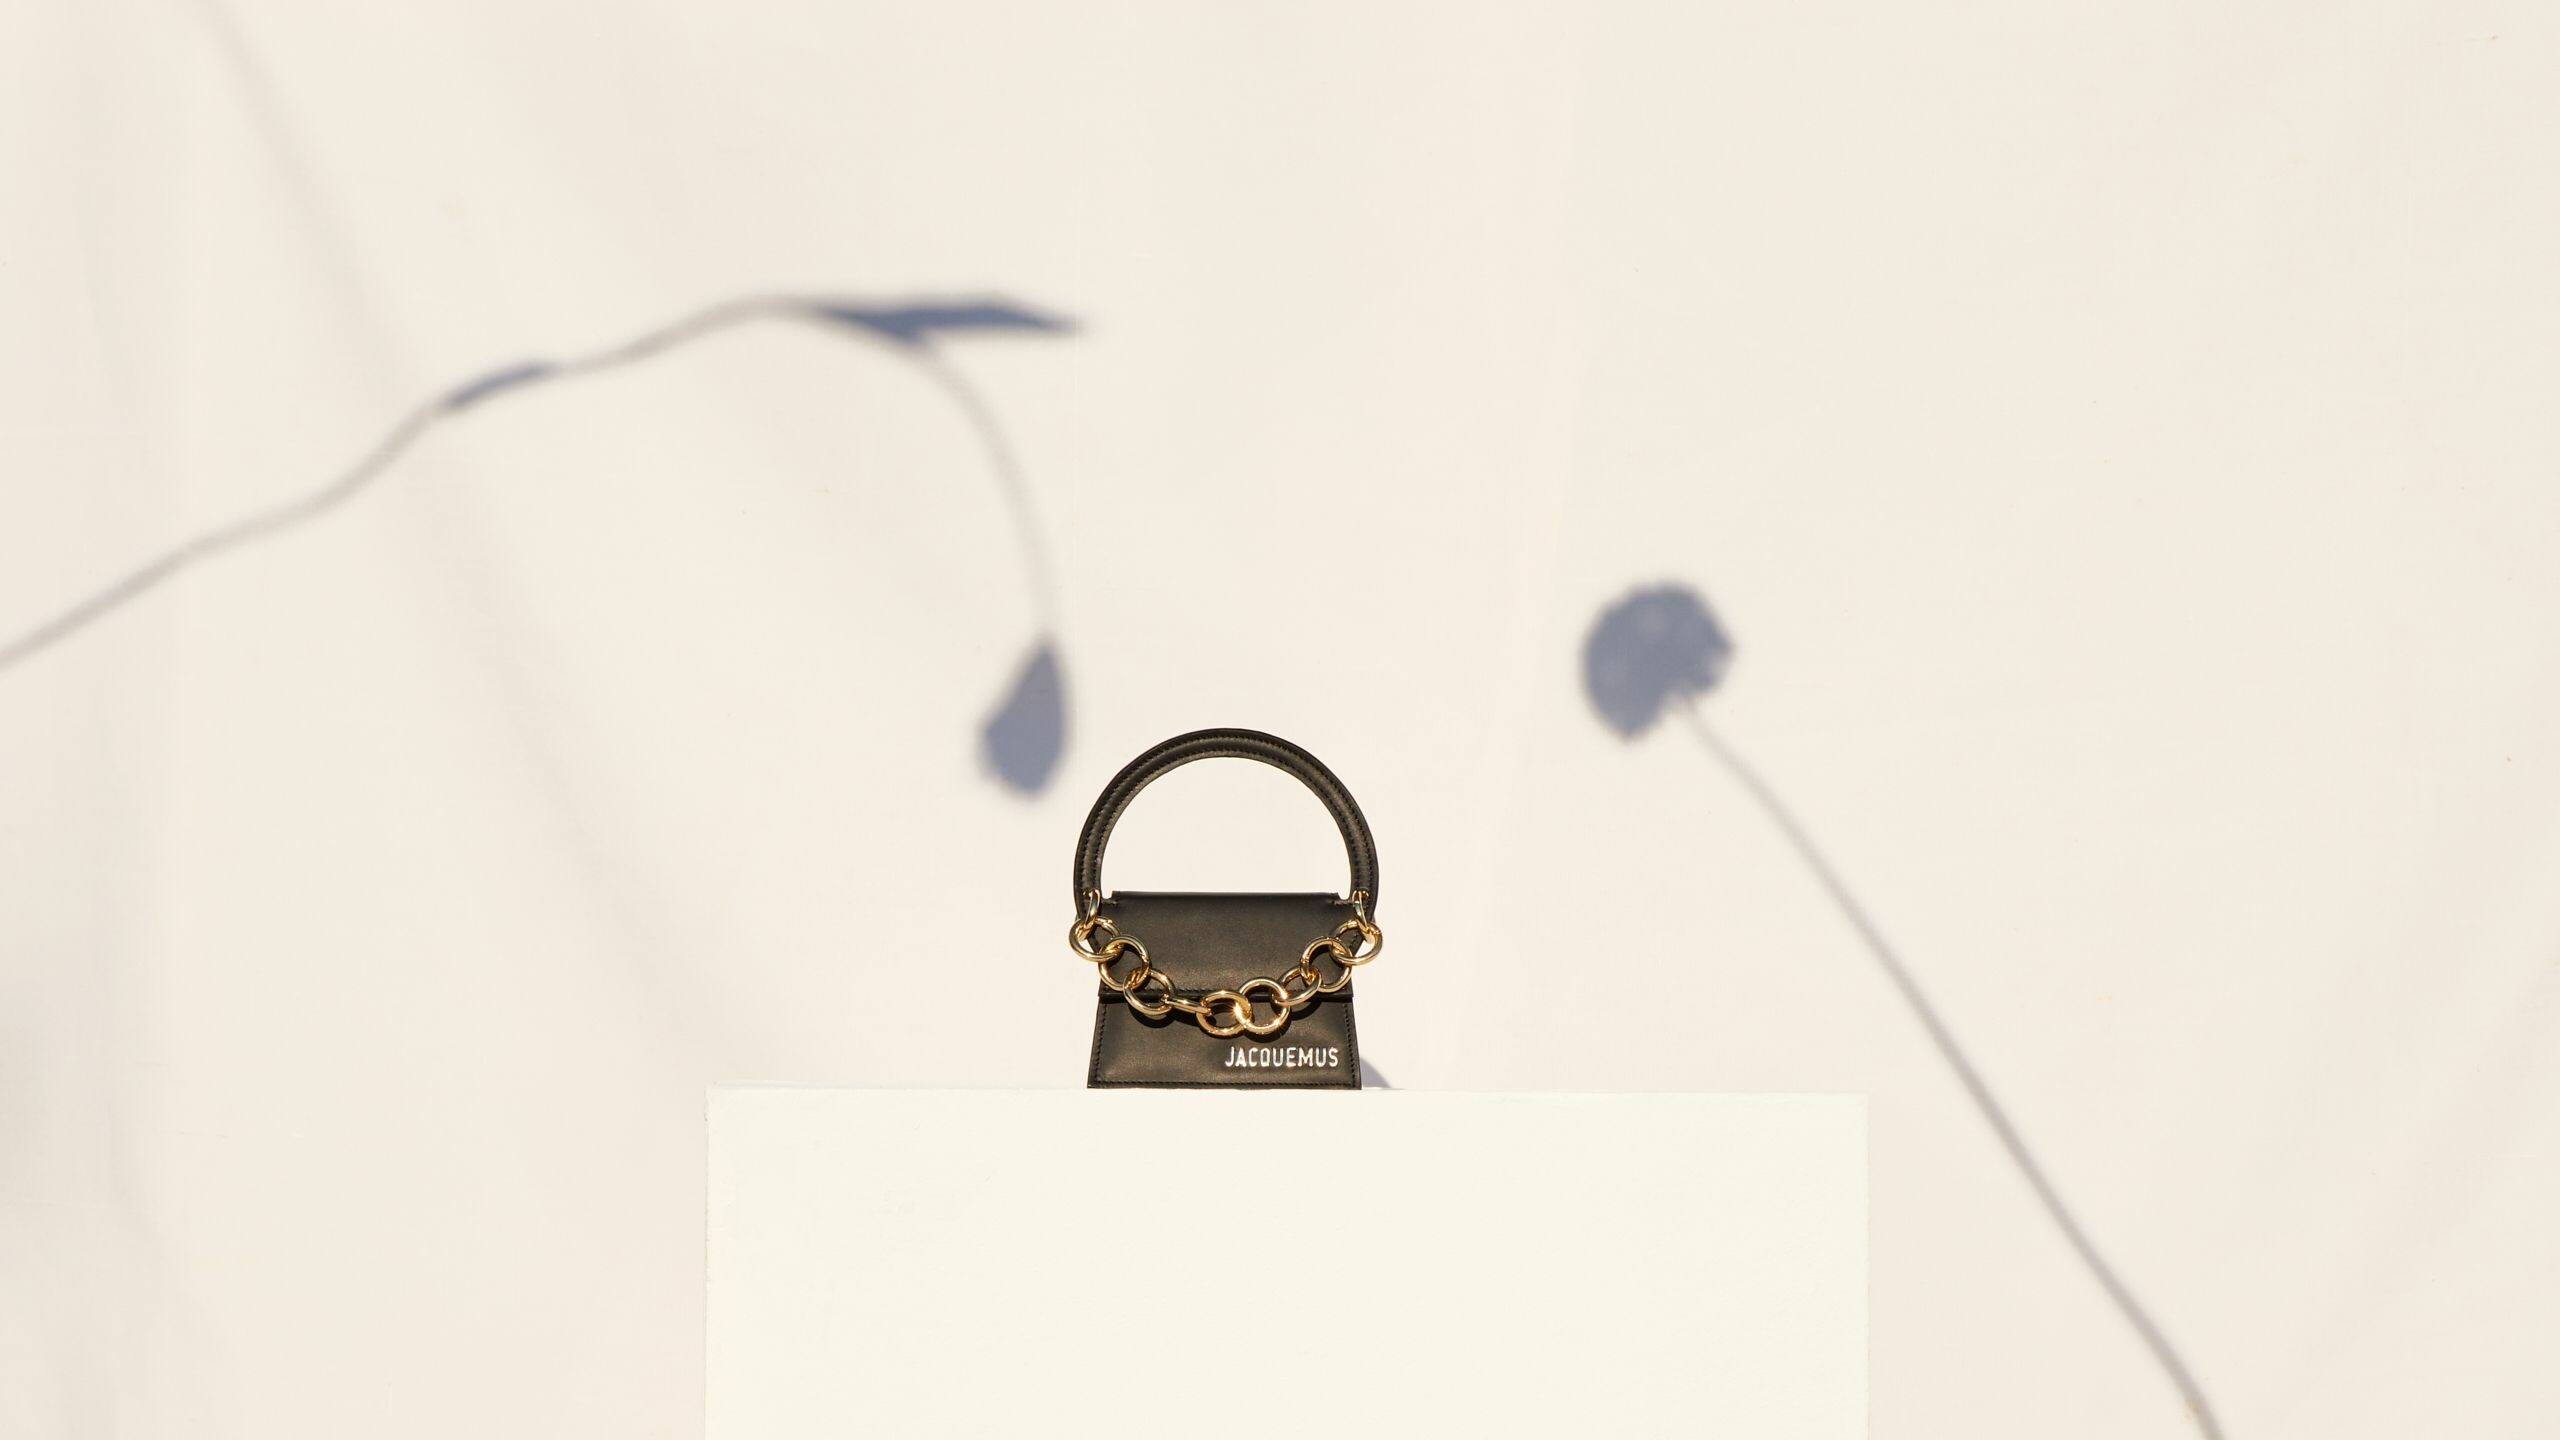 Jacquemus: A luxury brand, Simon Porte, Designer. 2560x1440 HD Background.